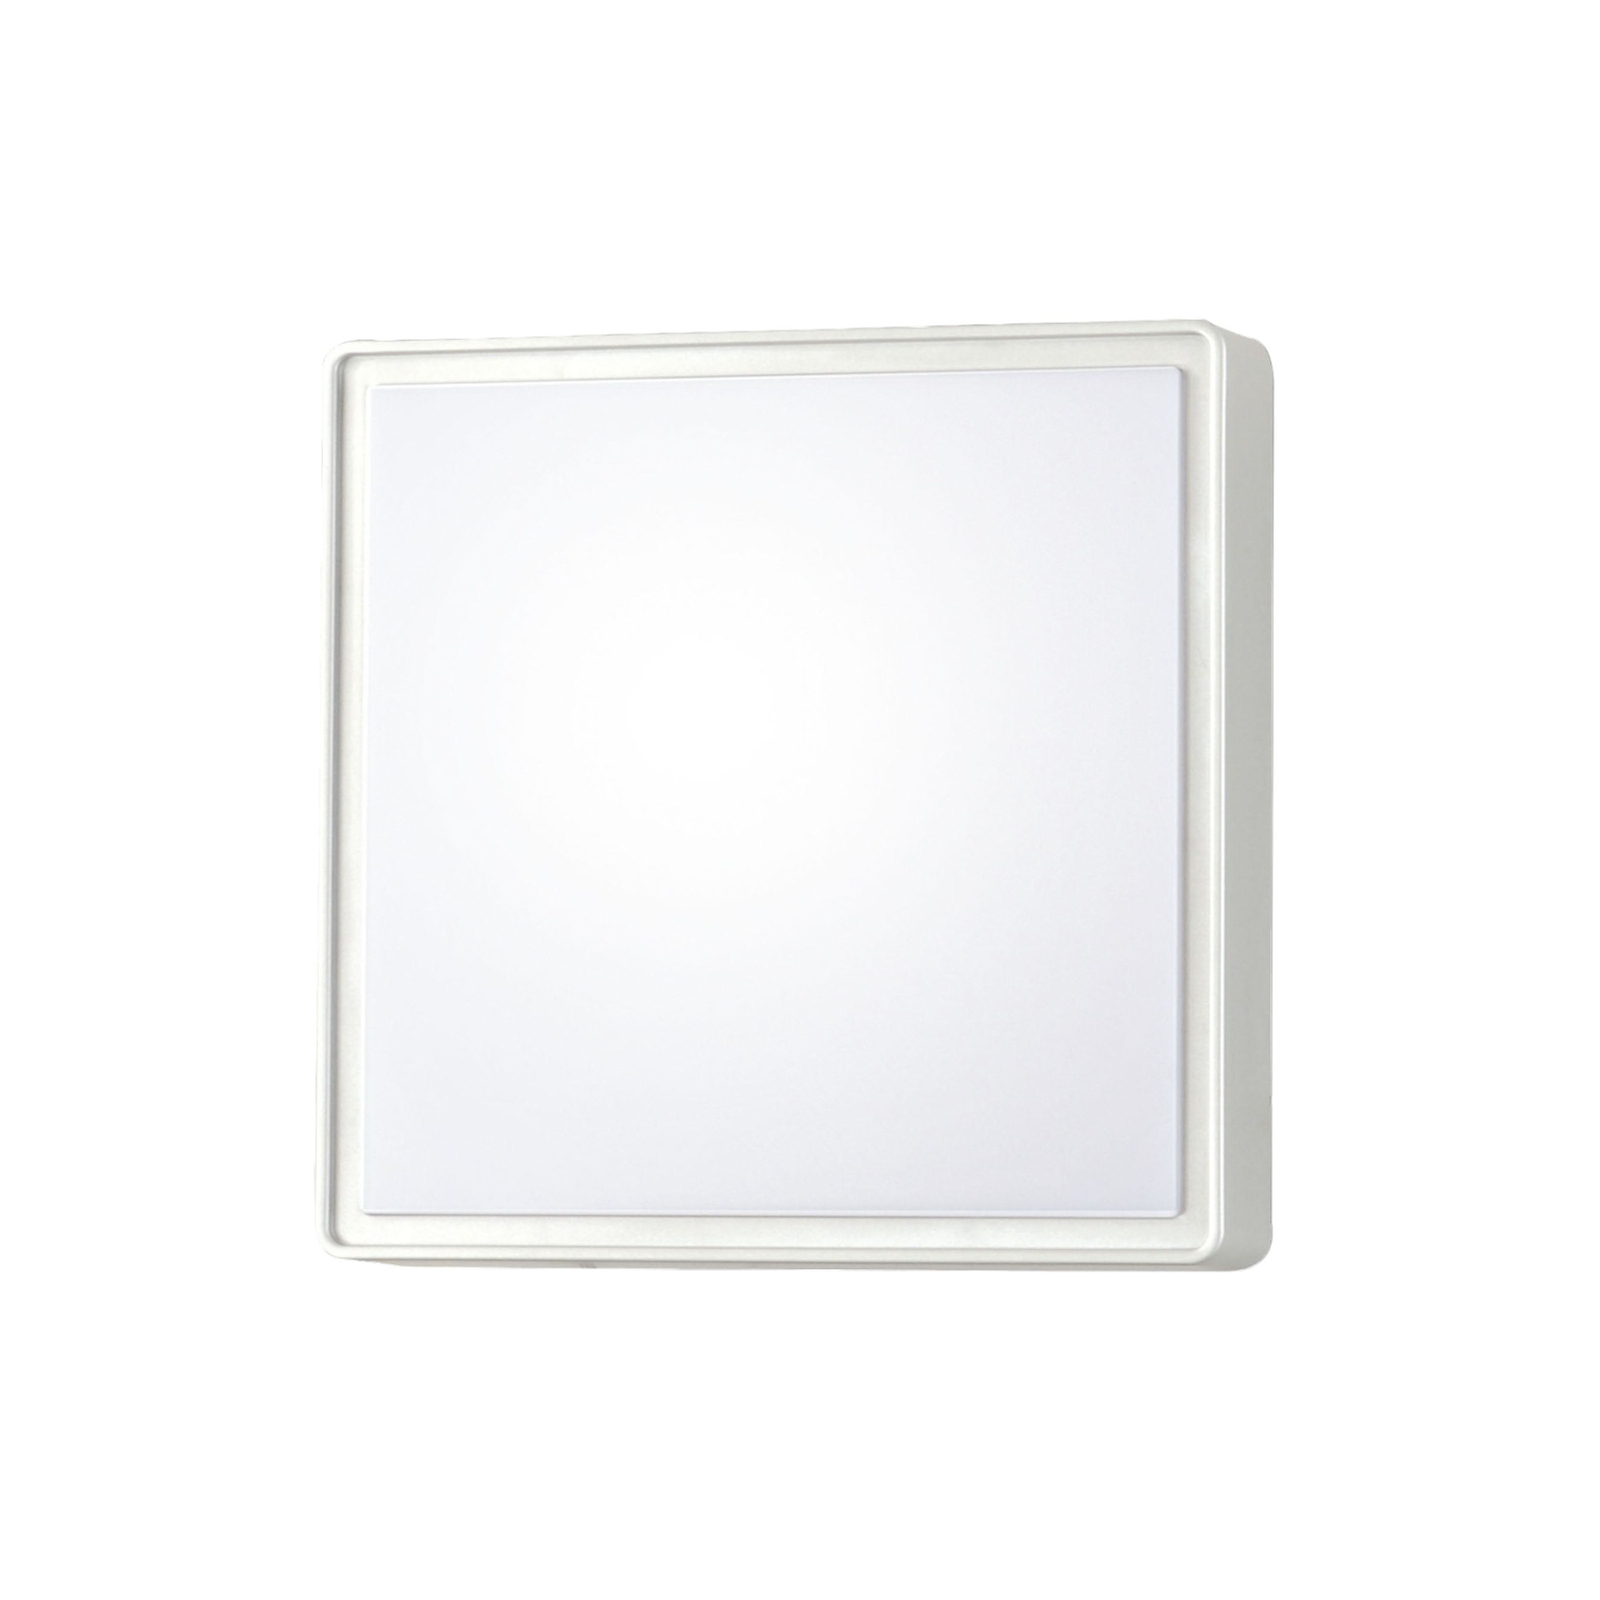 Oban LED-vägglampa, 30 cm x 30 cm, vit, IP65